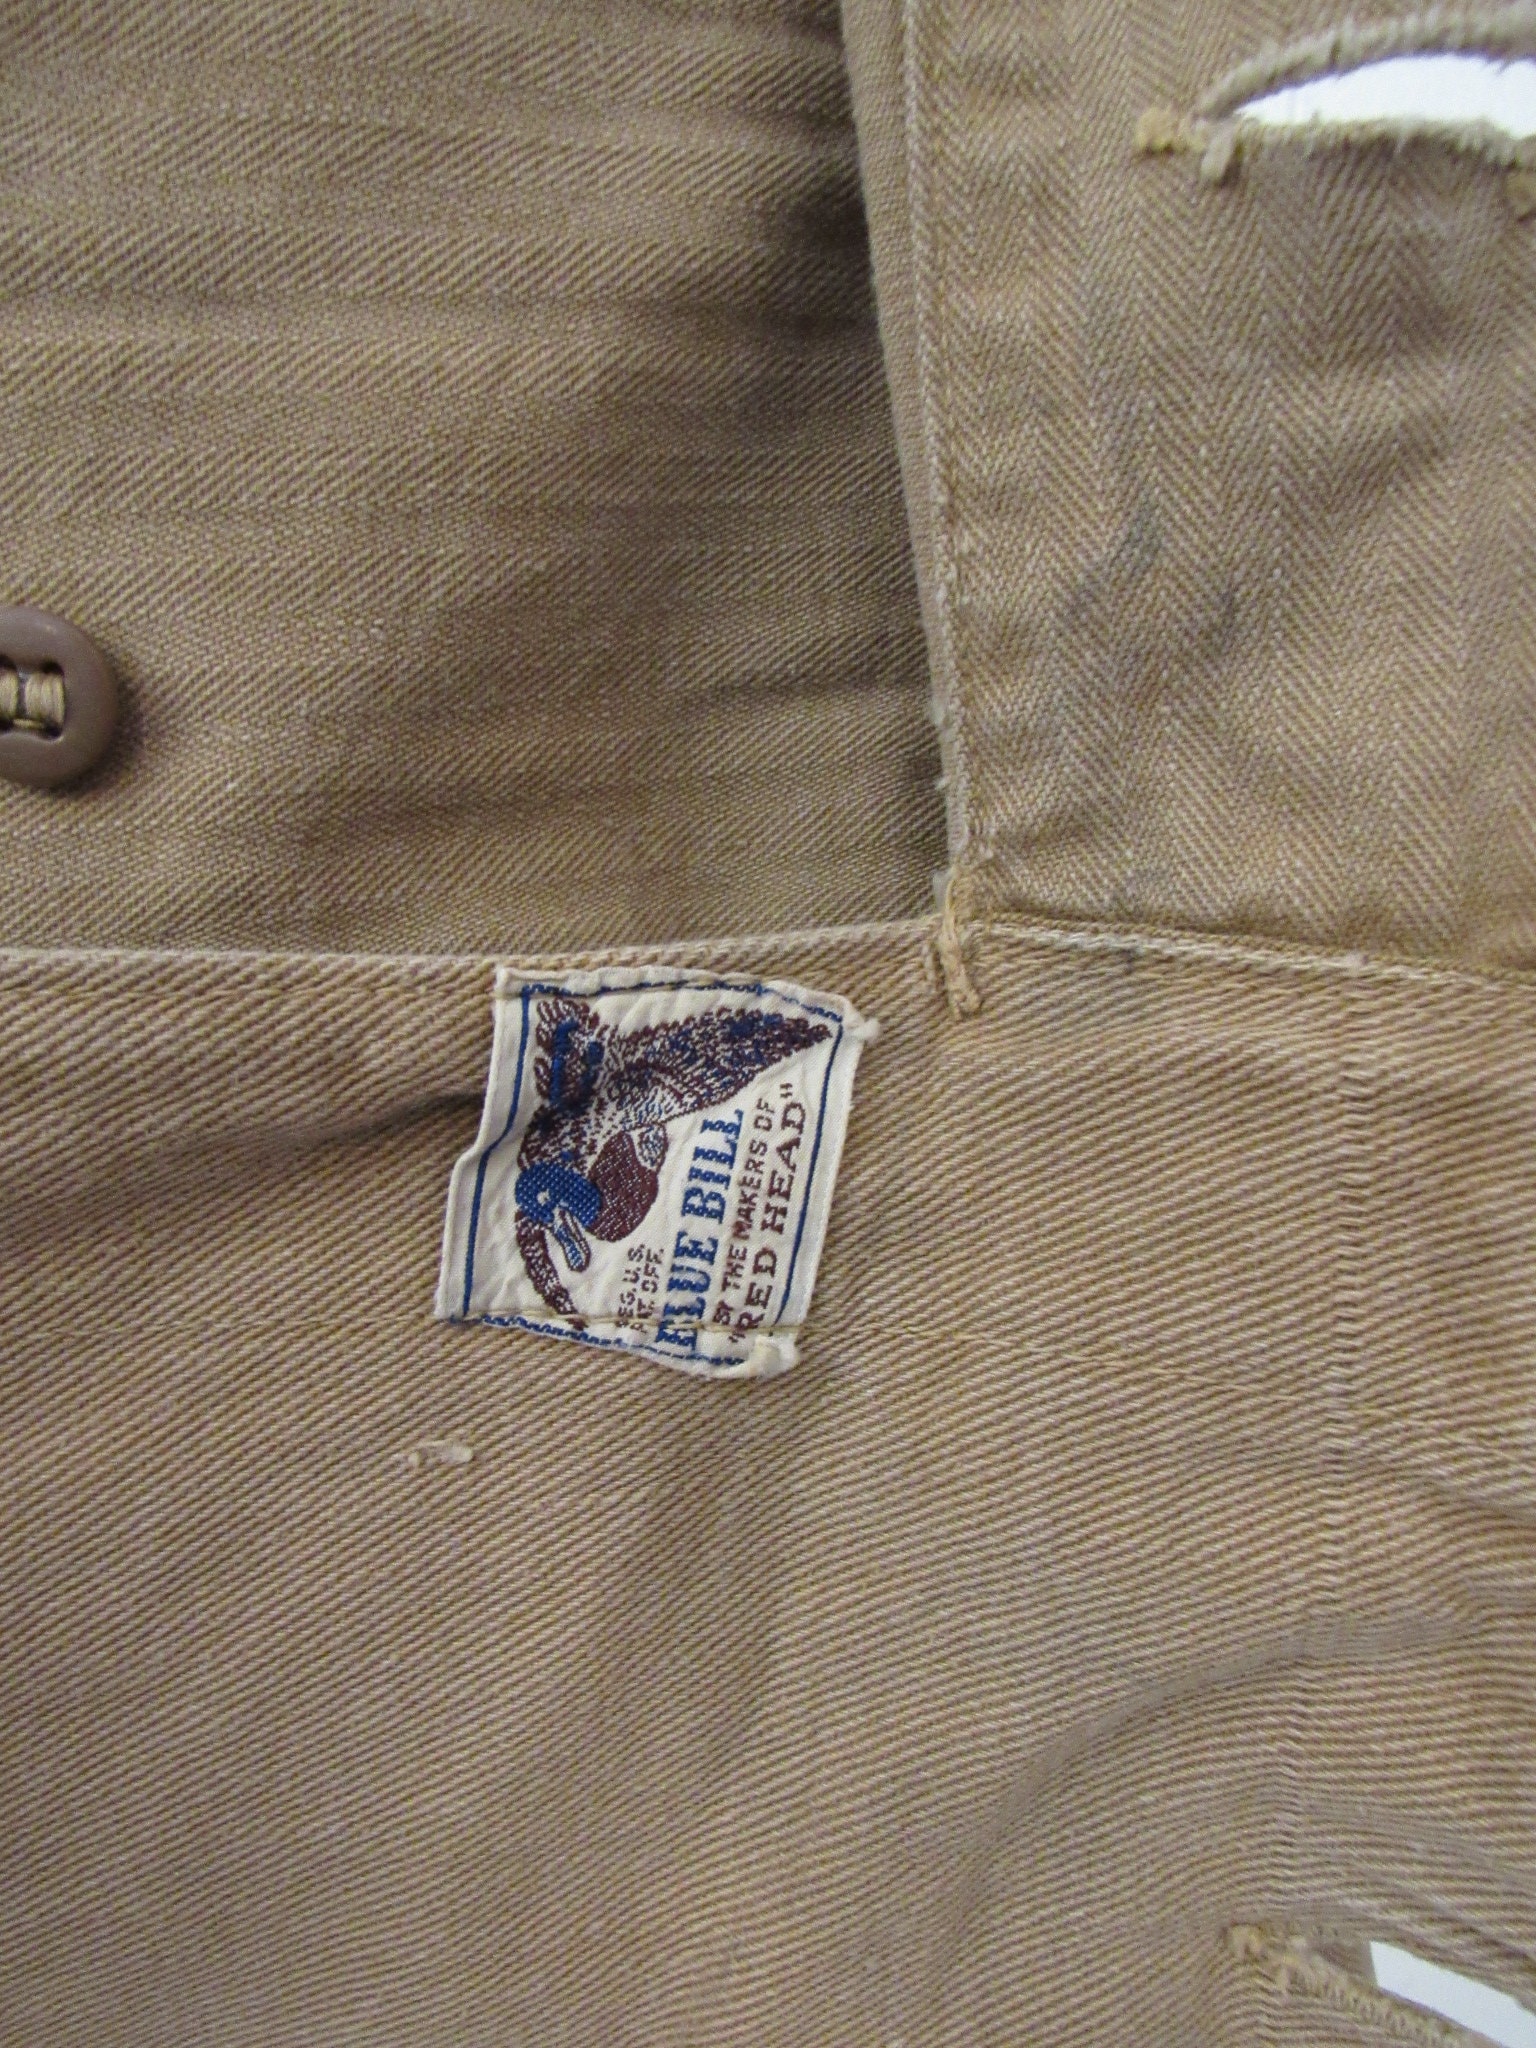 Vintage Jacket 1940s Jacket Hunting Jacket HBT Cotton - Etsy